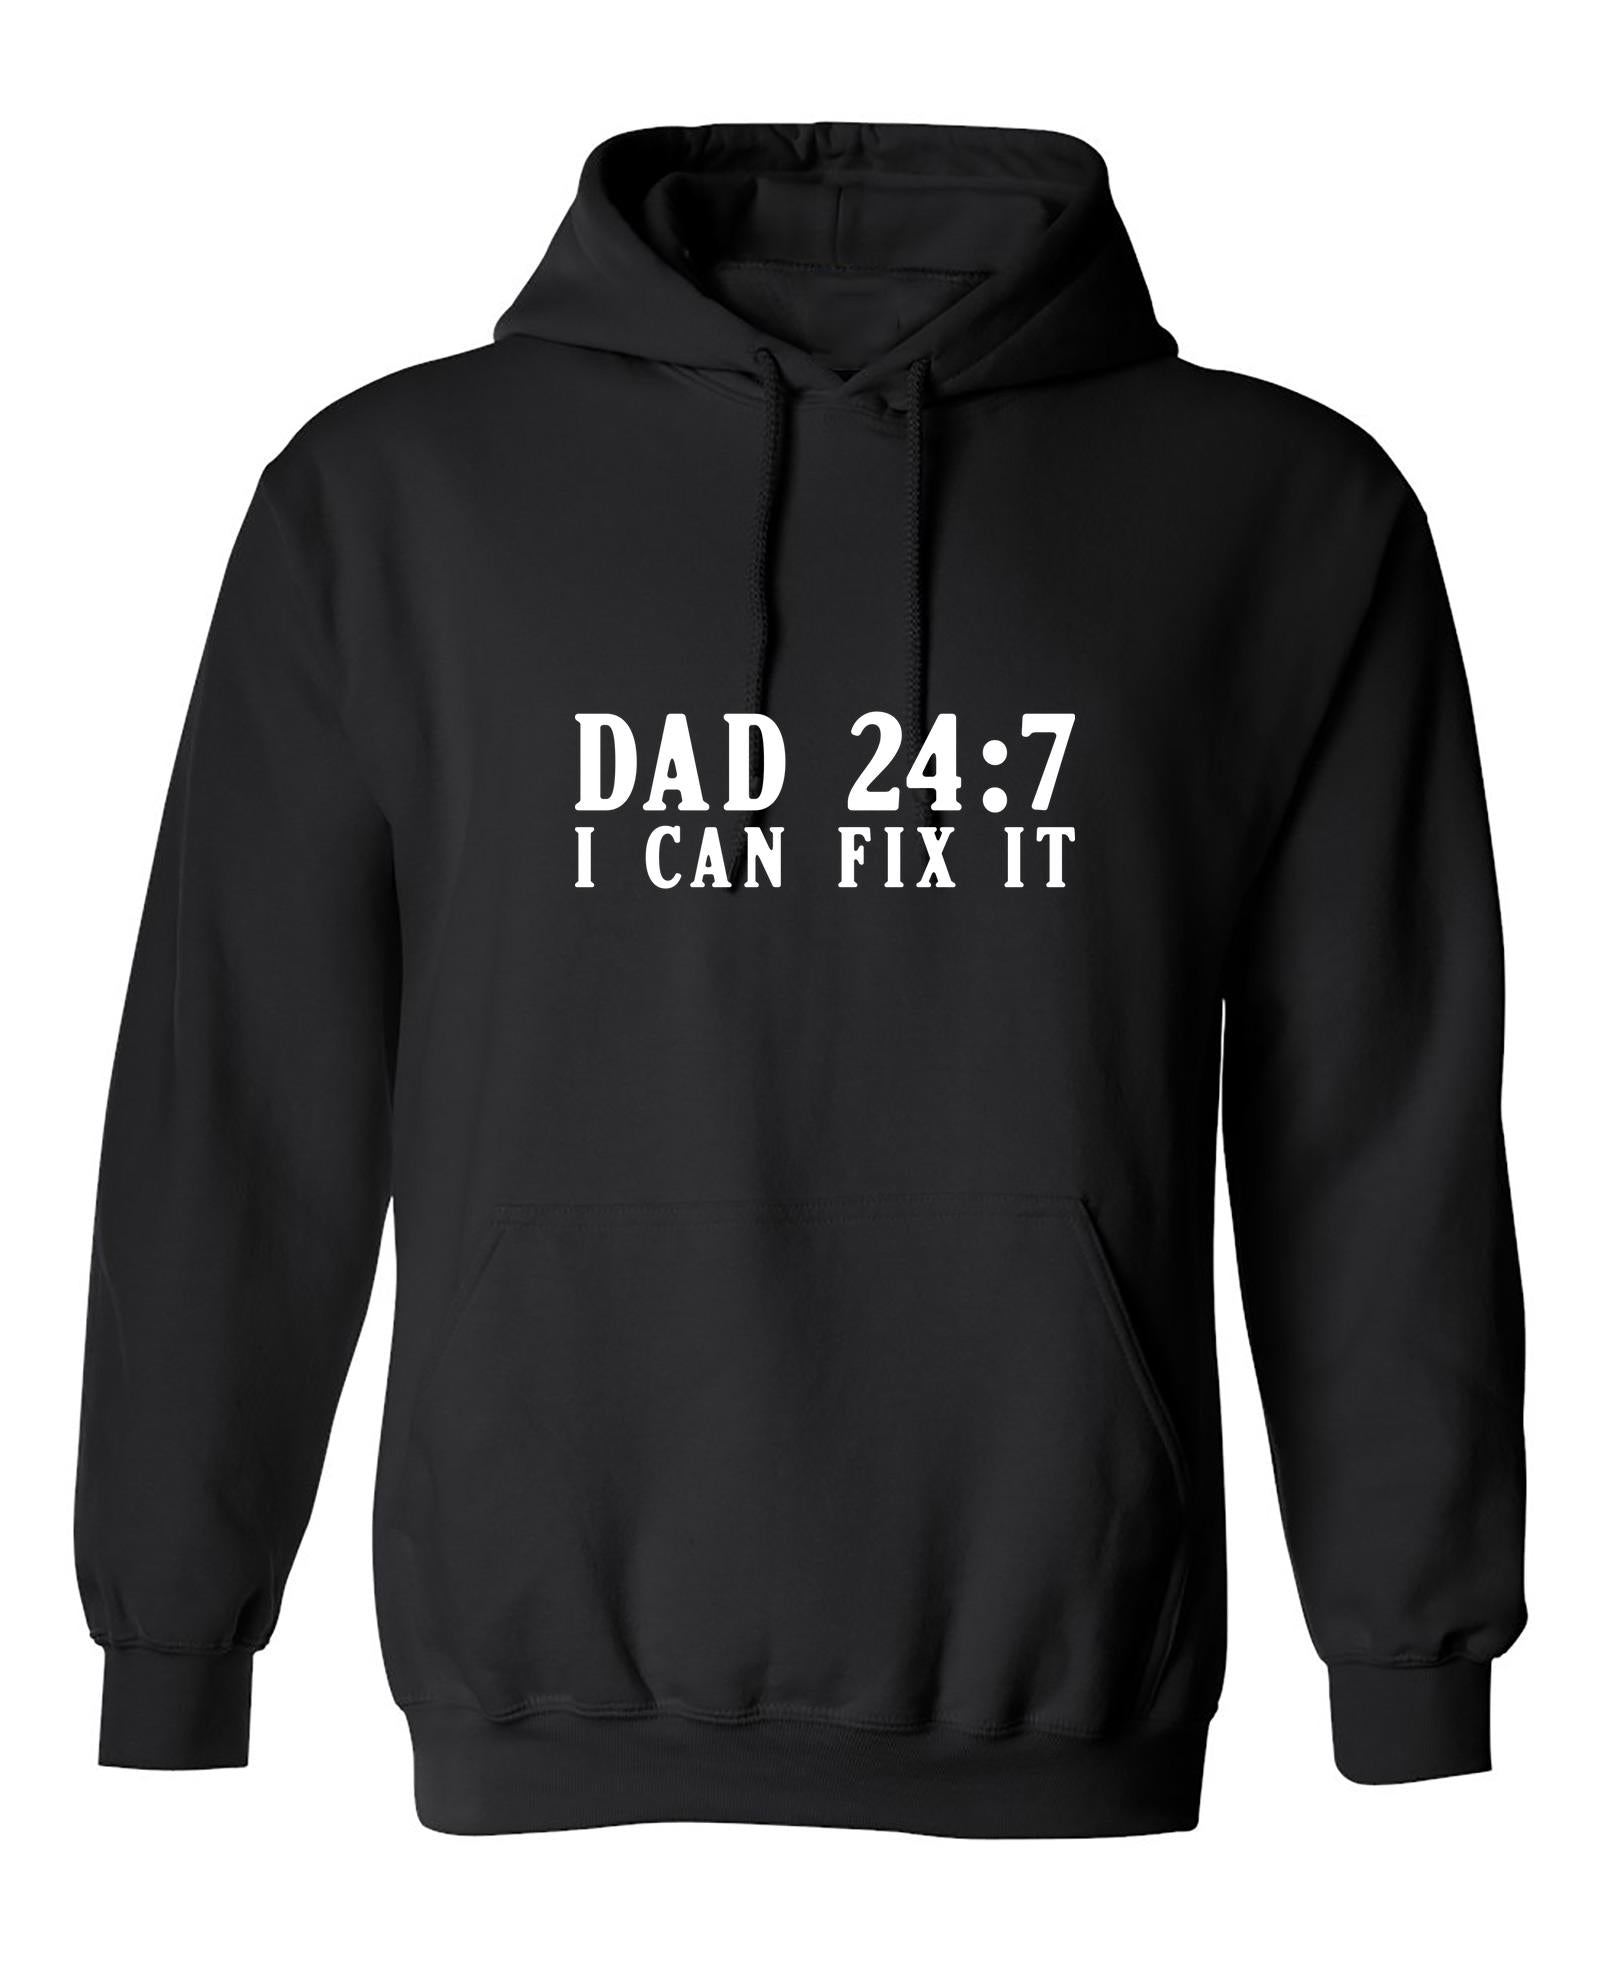 Funny T-Shirts design "Dad 24/7 I Can Fix it."